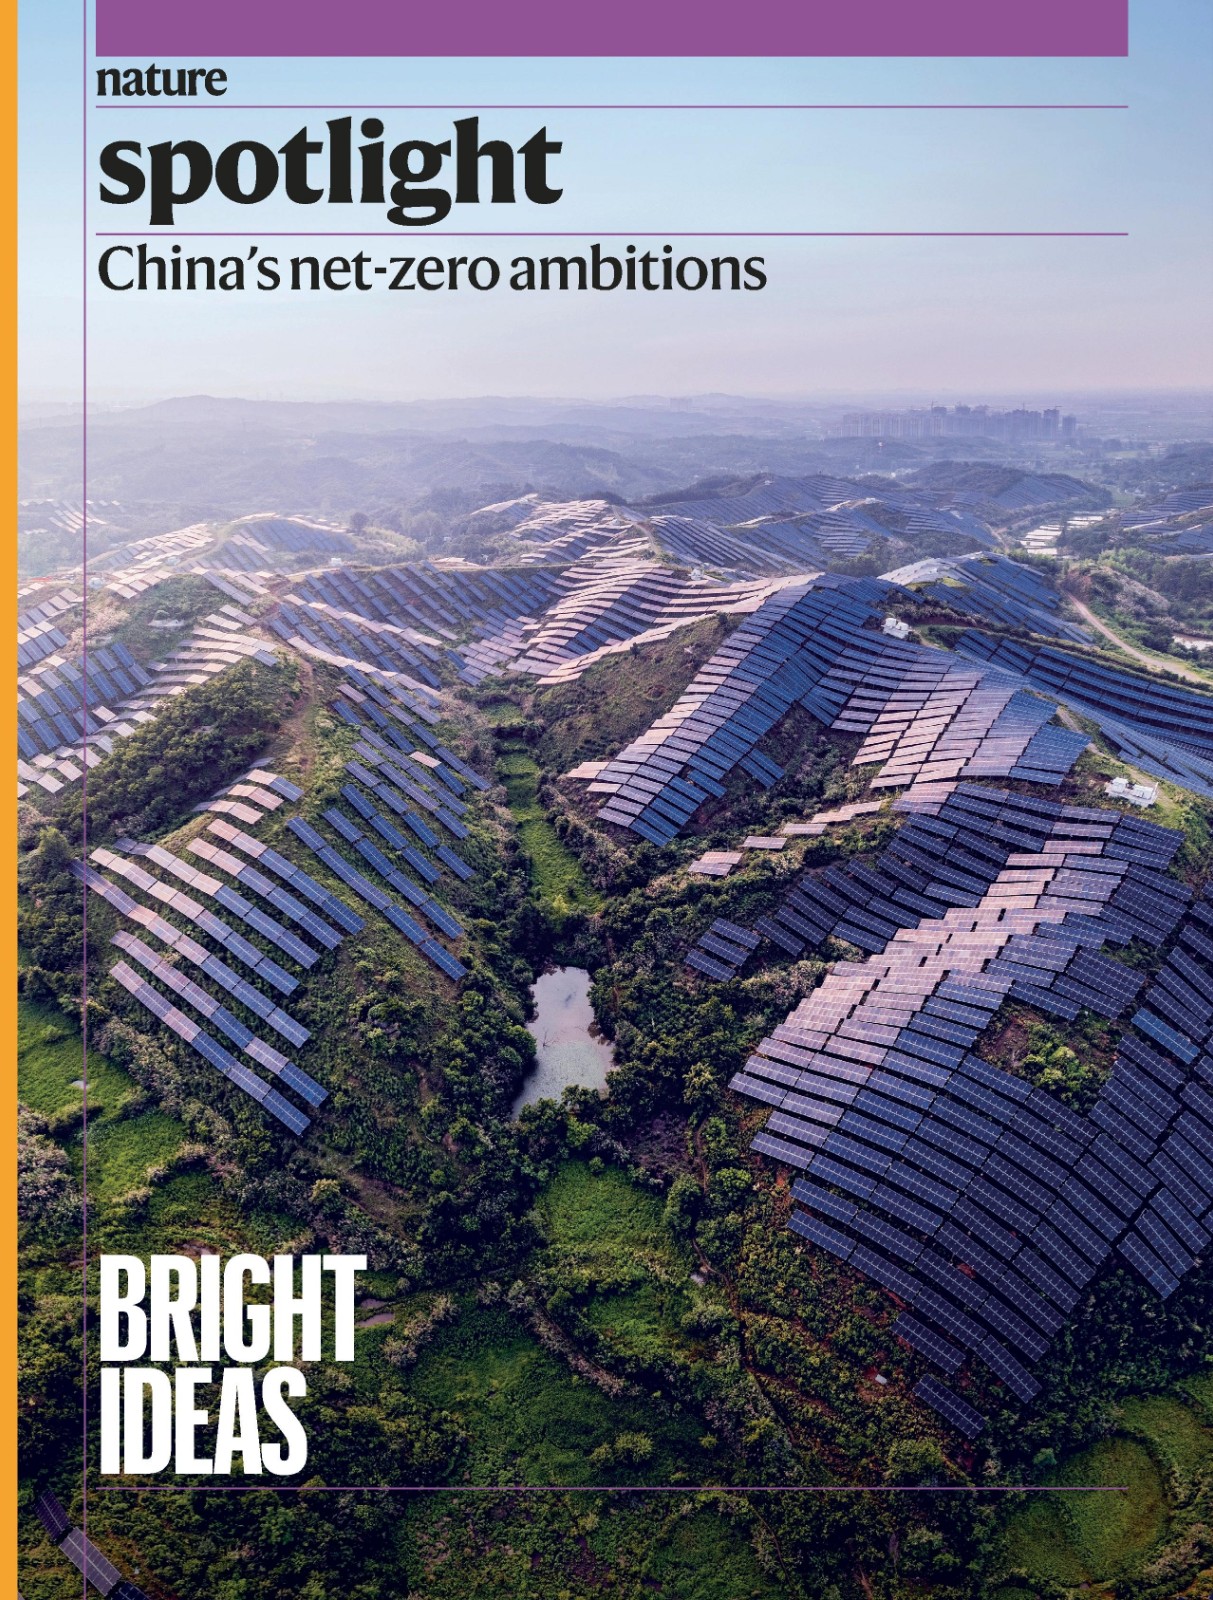 Nature Spotlight on China's net-zero ambitions